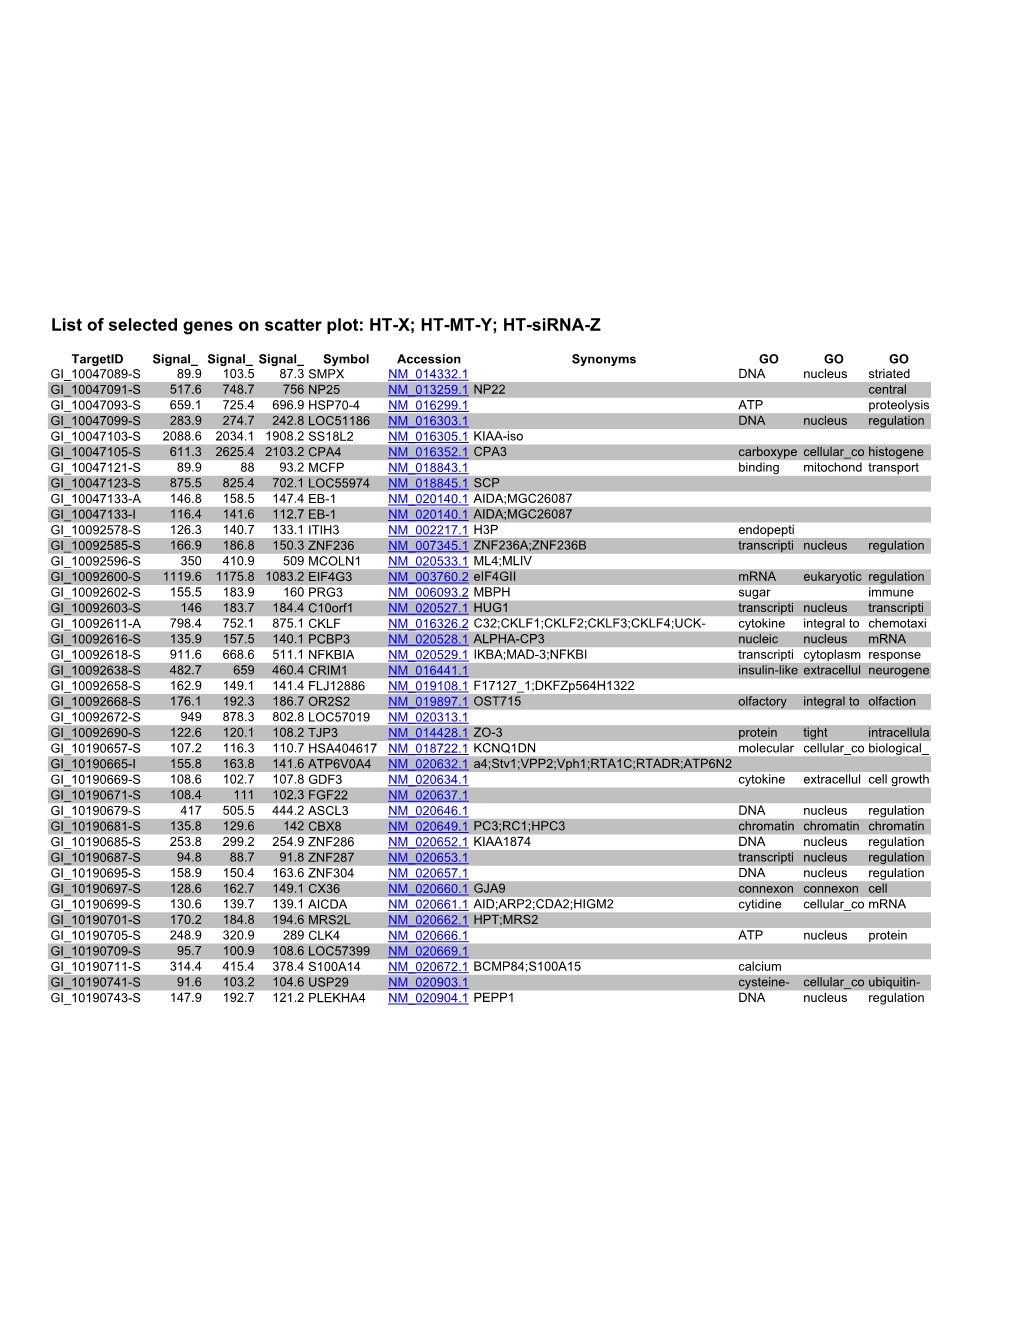 List of Selected Genes on Scatter Plot: HT-X; HT-MT-Y; HT-Sirna-Z